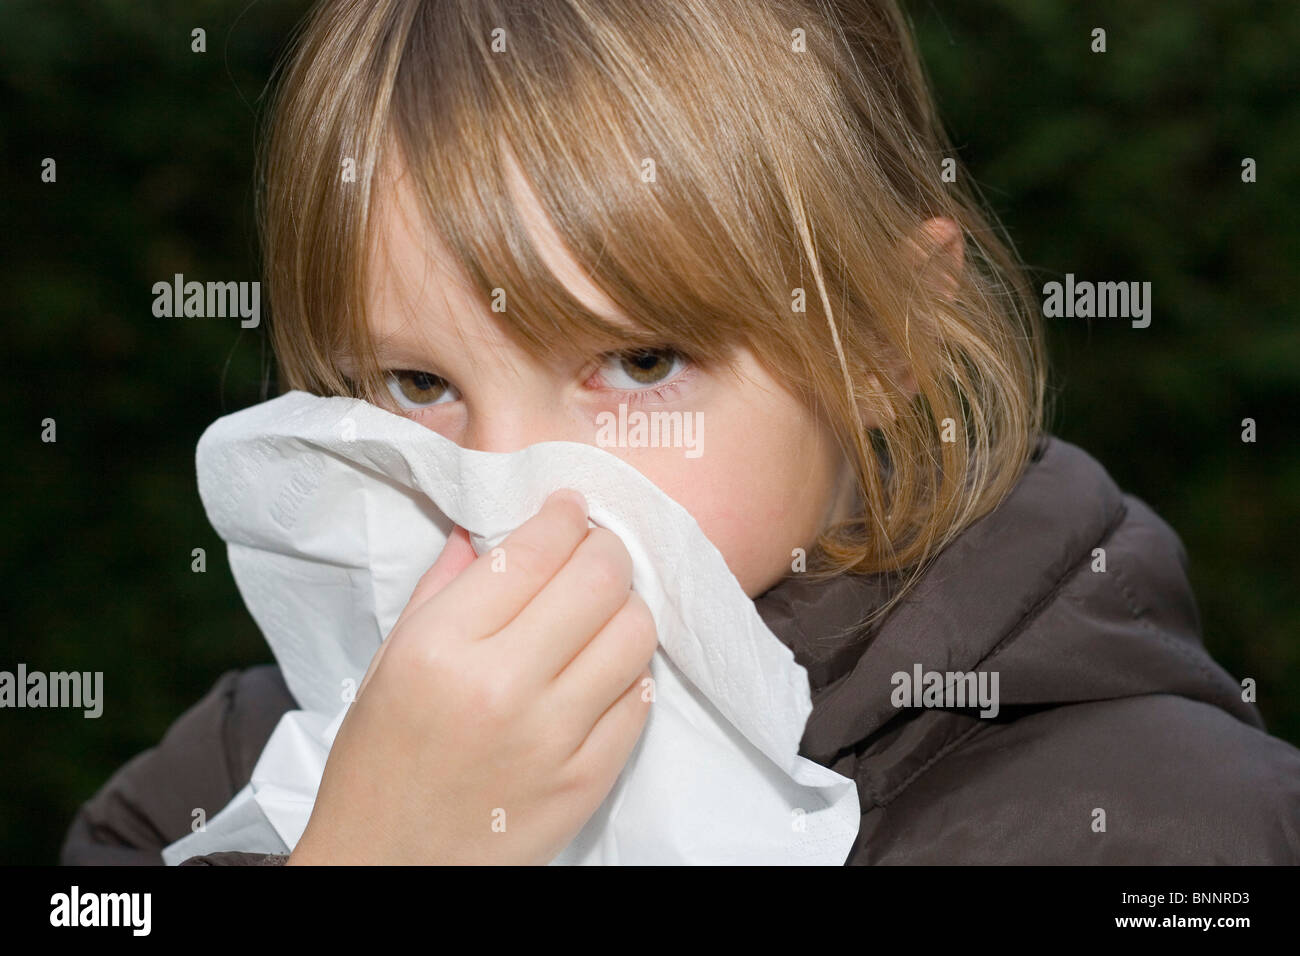 five-year-old girls child handkerchief pre-school age child health a cold cold ill sick autumn influenza Stock Photo